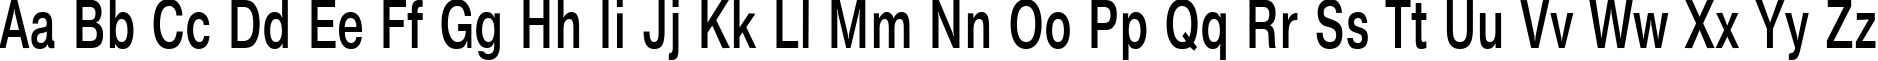 Пример написания английского алфавита шрифтом NTHarmonica Bold70b